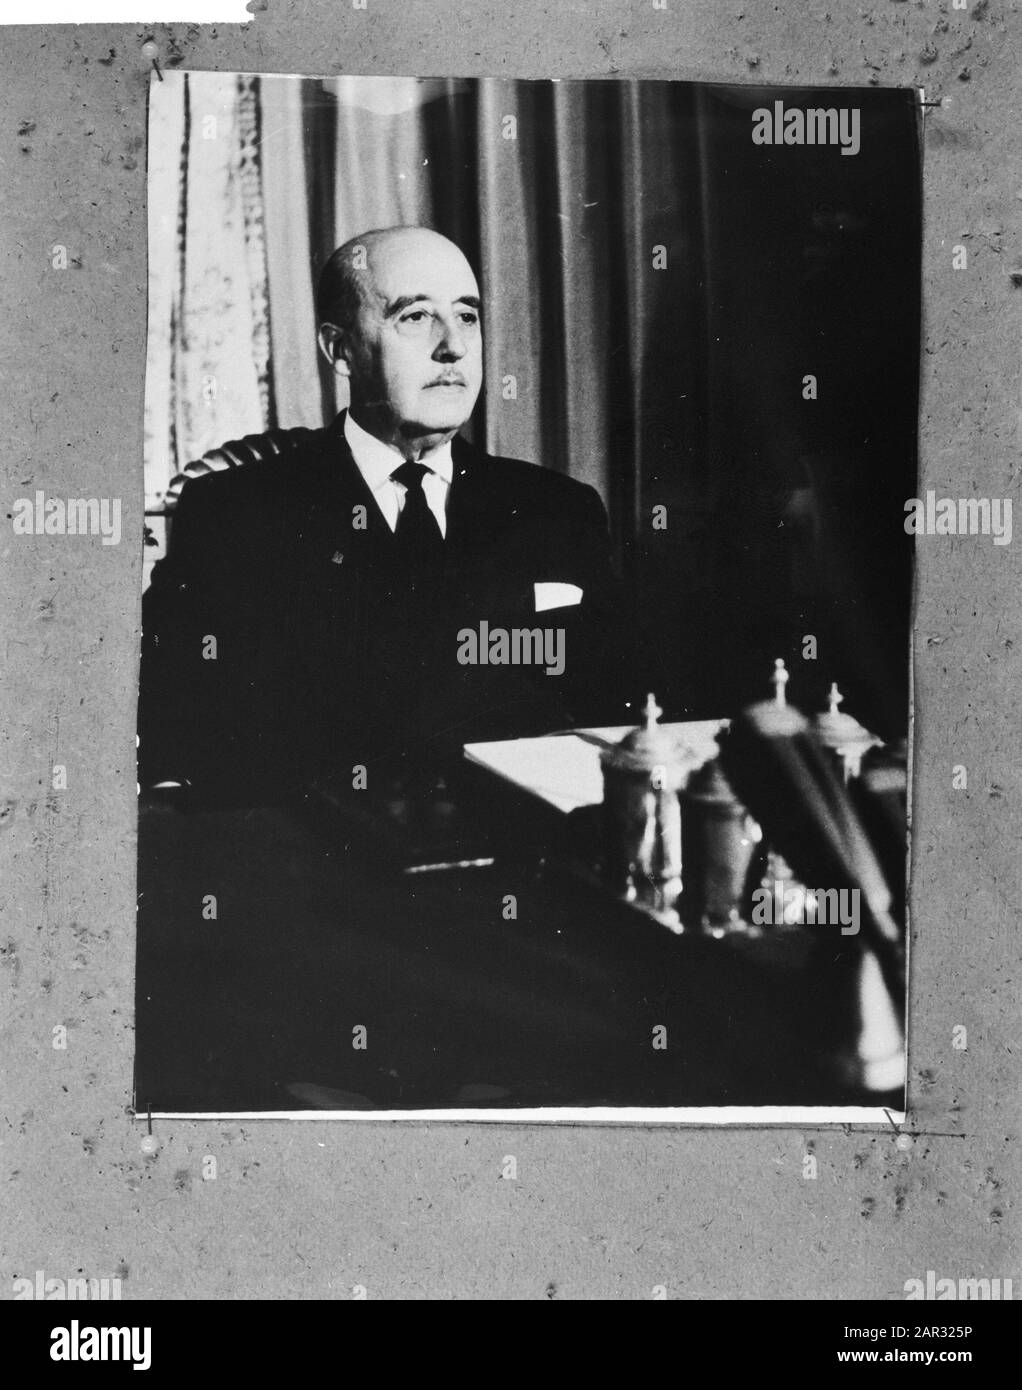 Generalissimo Franco, Caudillo of Spain Date: 26 February 1964 Location: Spain Keywords: dictators, generals, portraits, heads of state Personal name: Franco Bahamonde Francisco  : Stock Photo